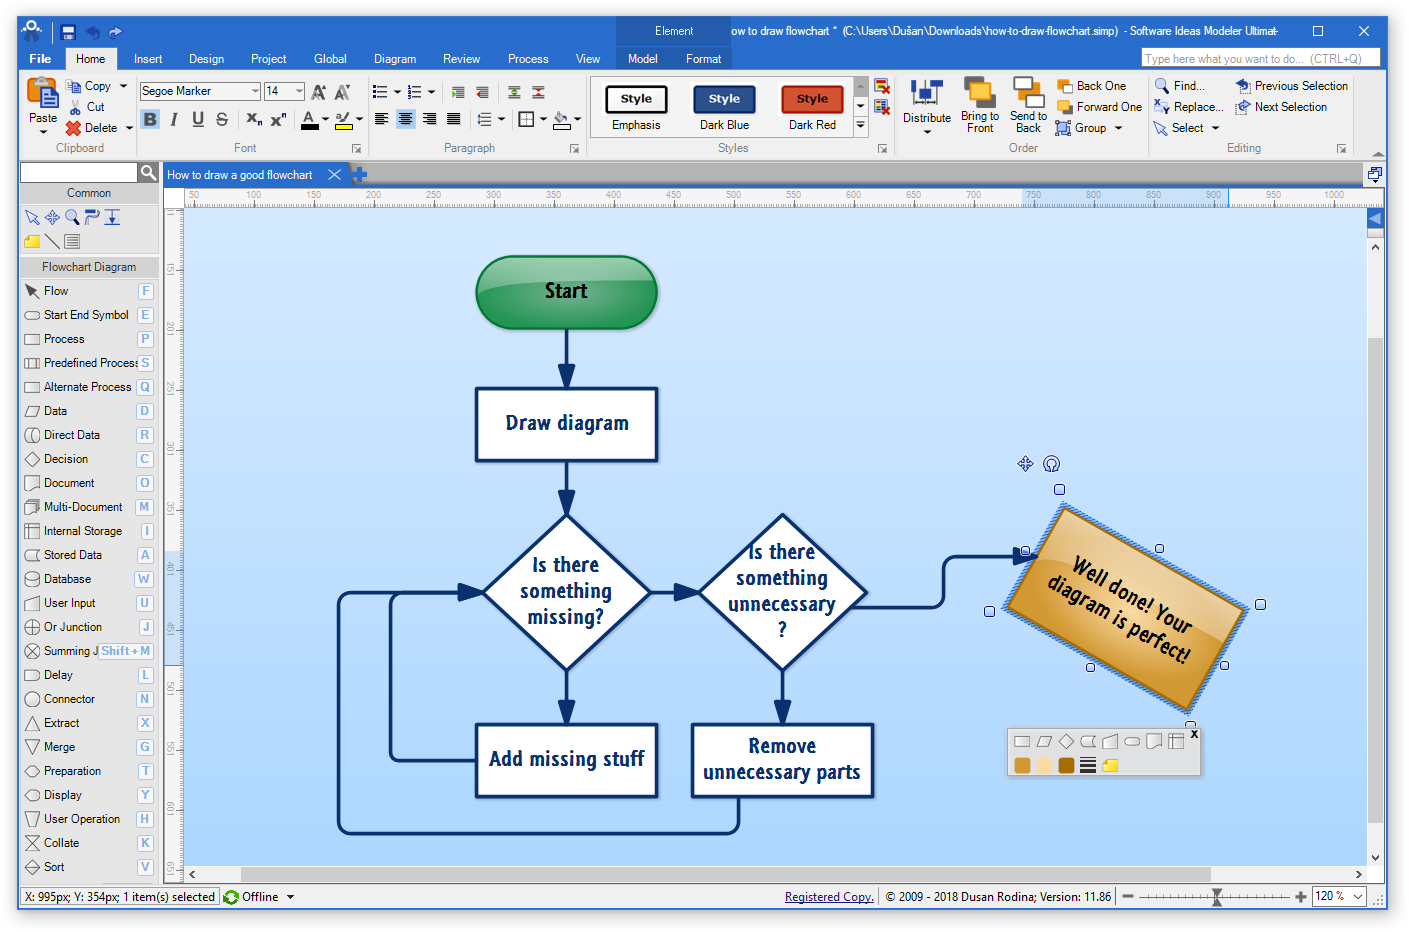 Software Ideas Modeler -  Diagram Software